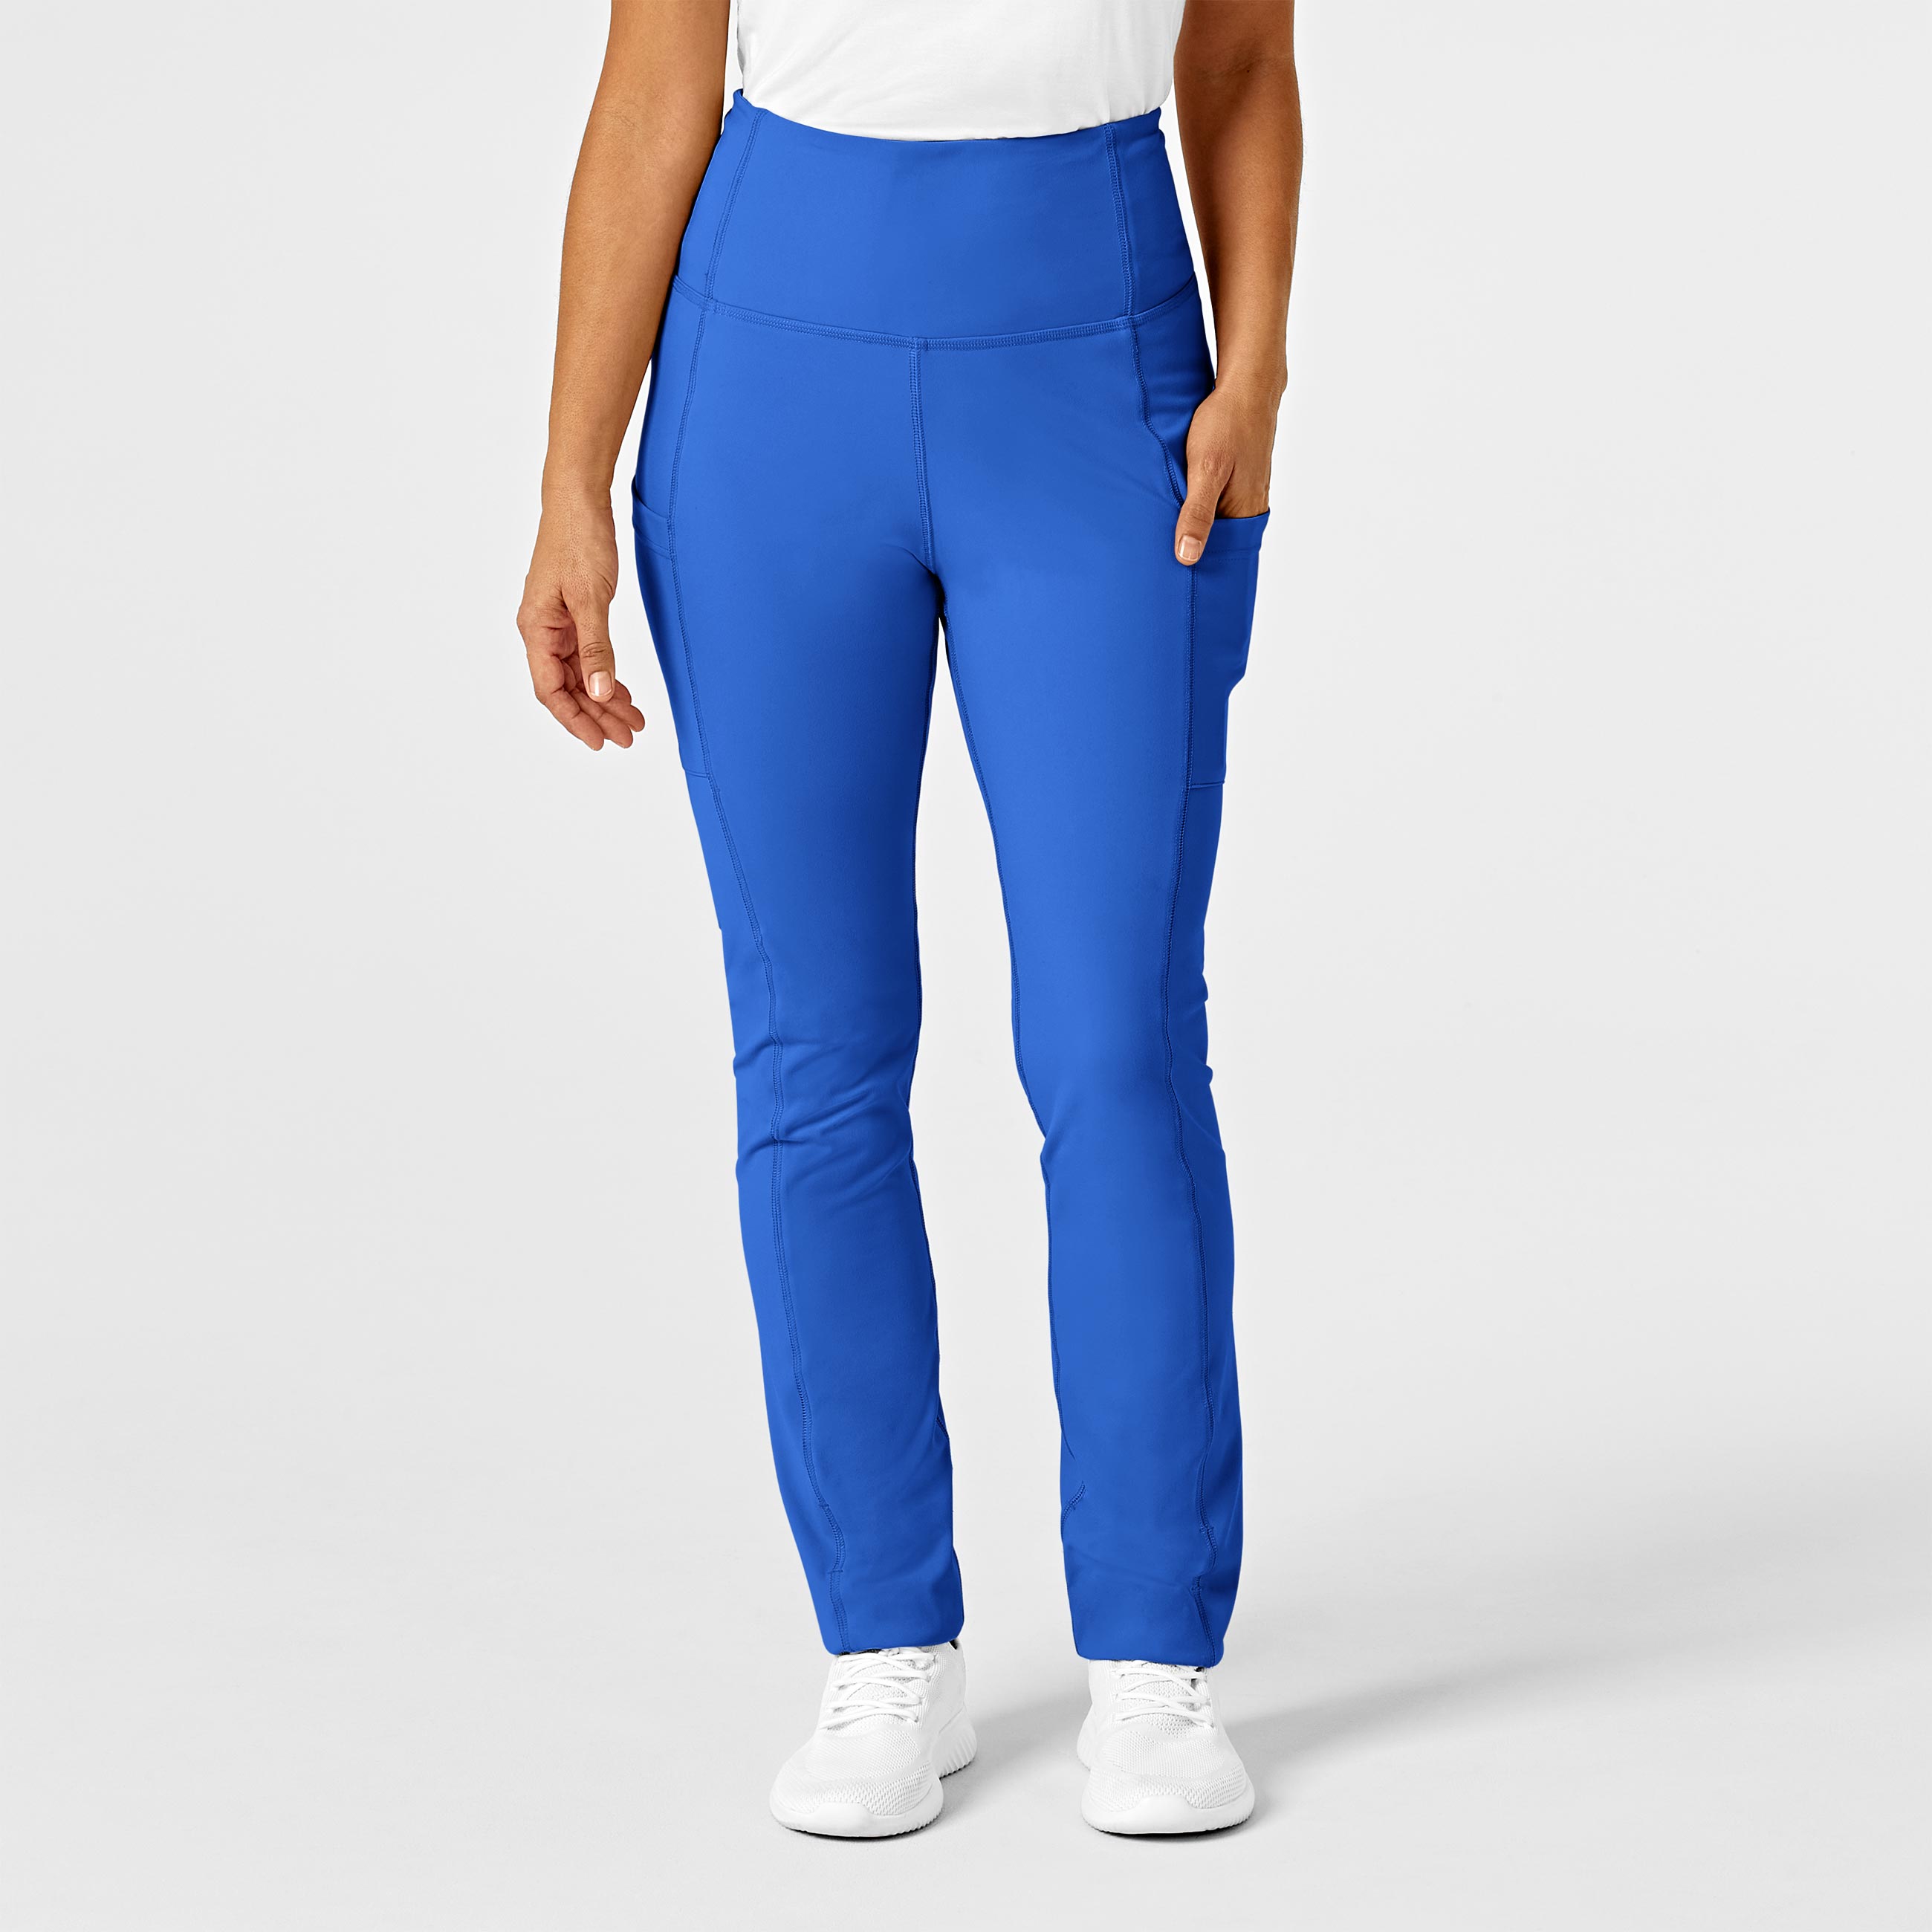 Blue Yoga Pants : Target